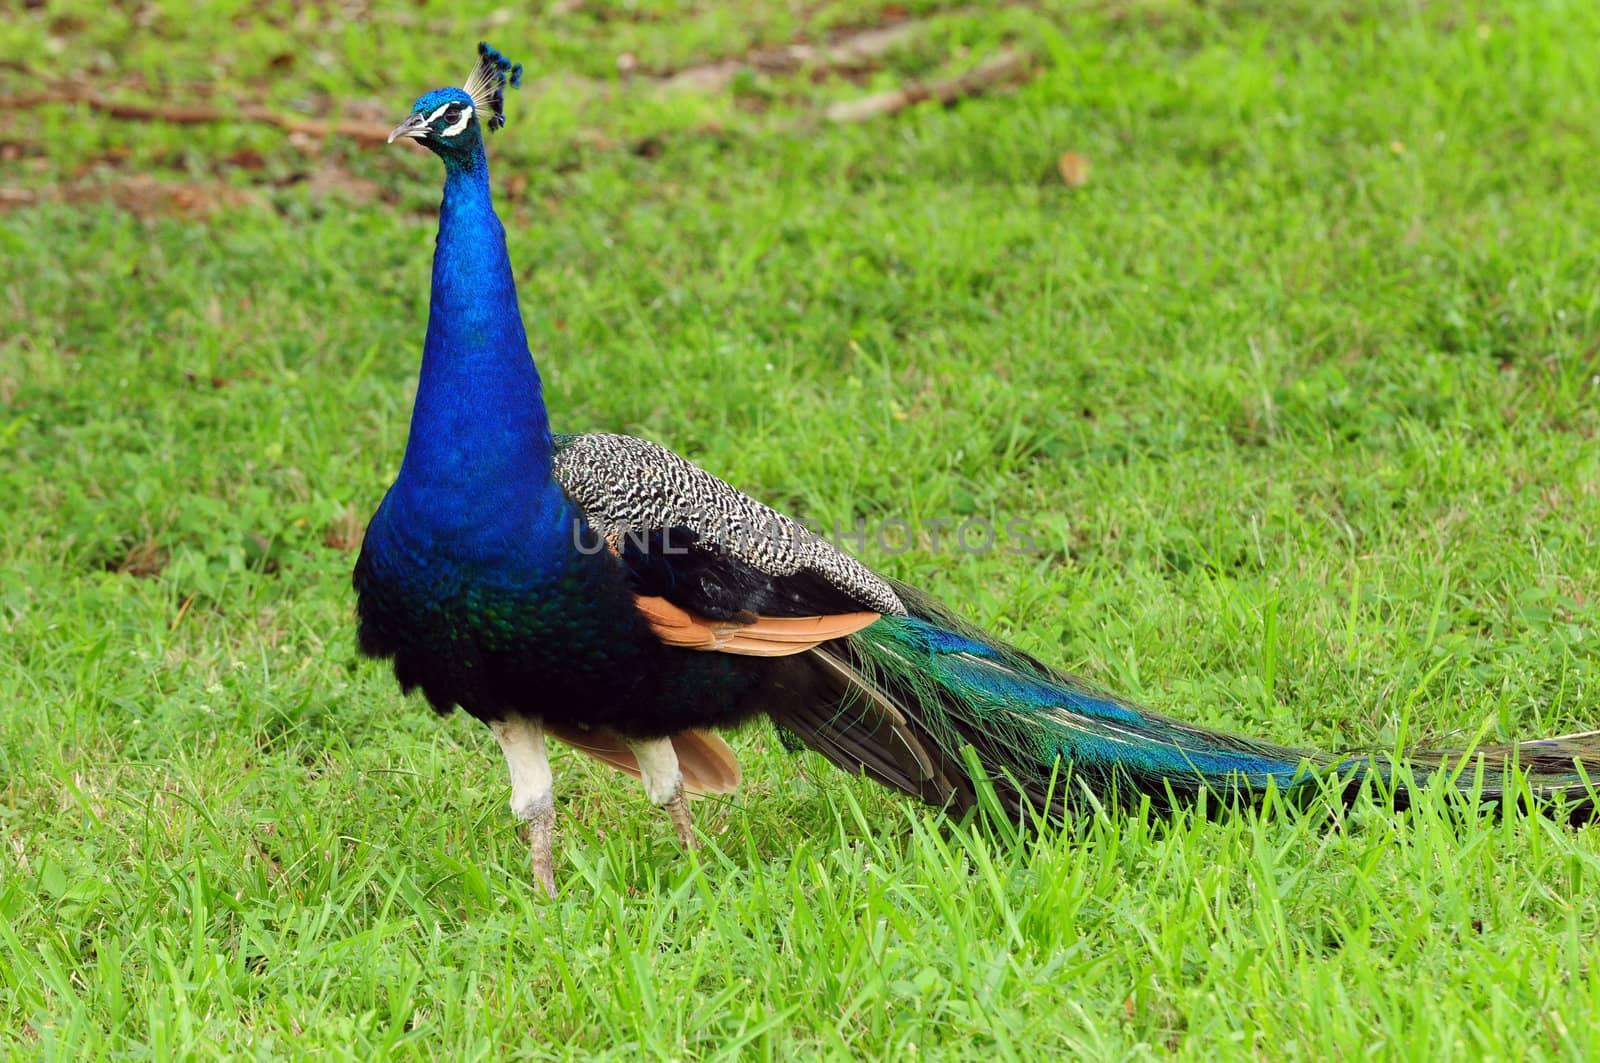 Pretty Peacock bird outdoors in natural habitat